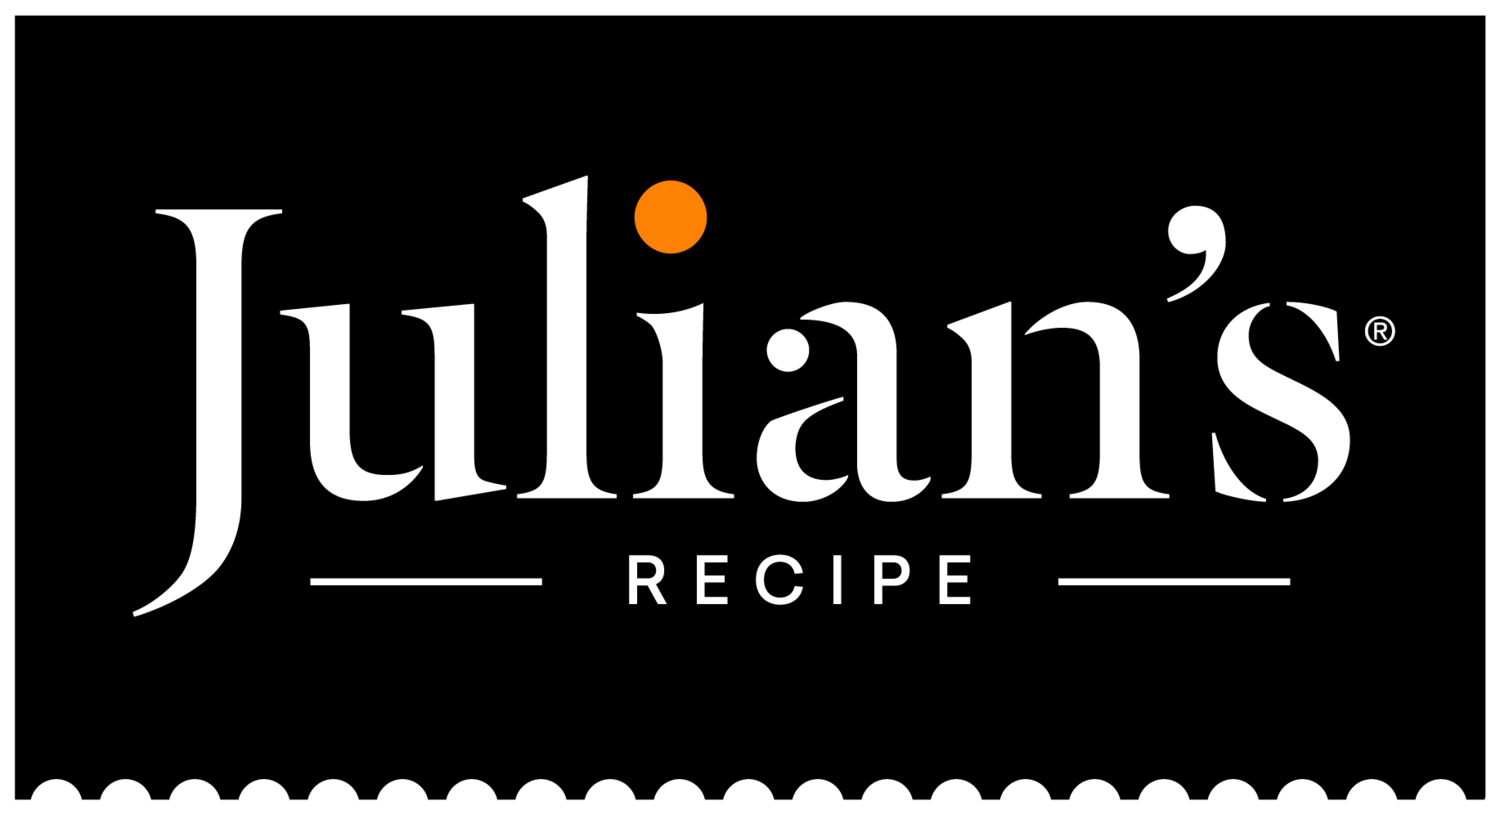 Julian's Recipe